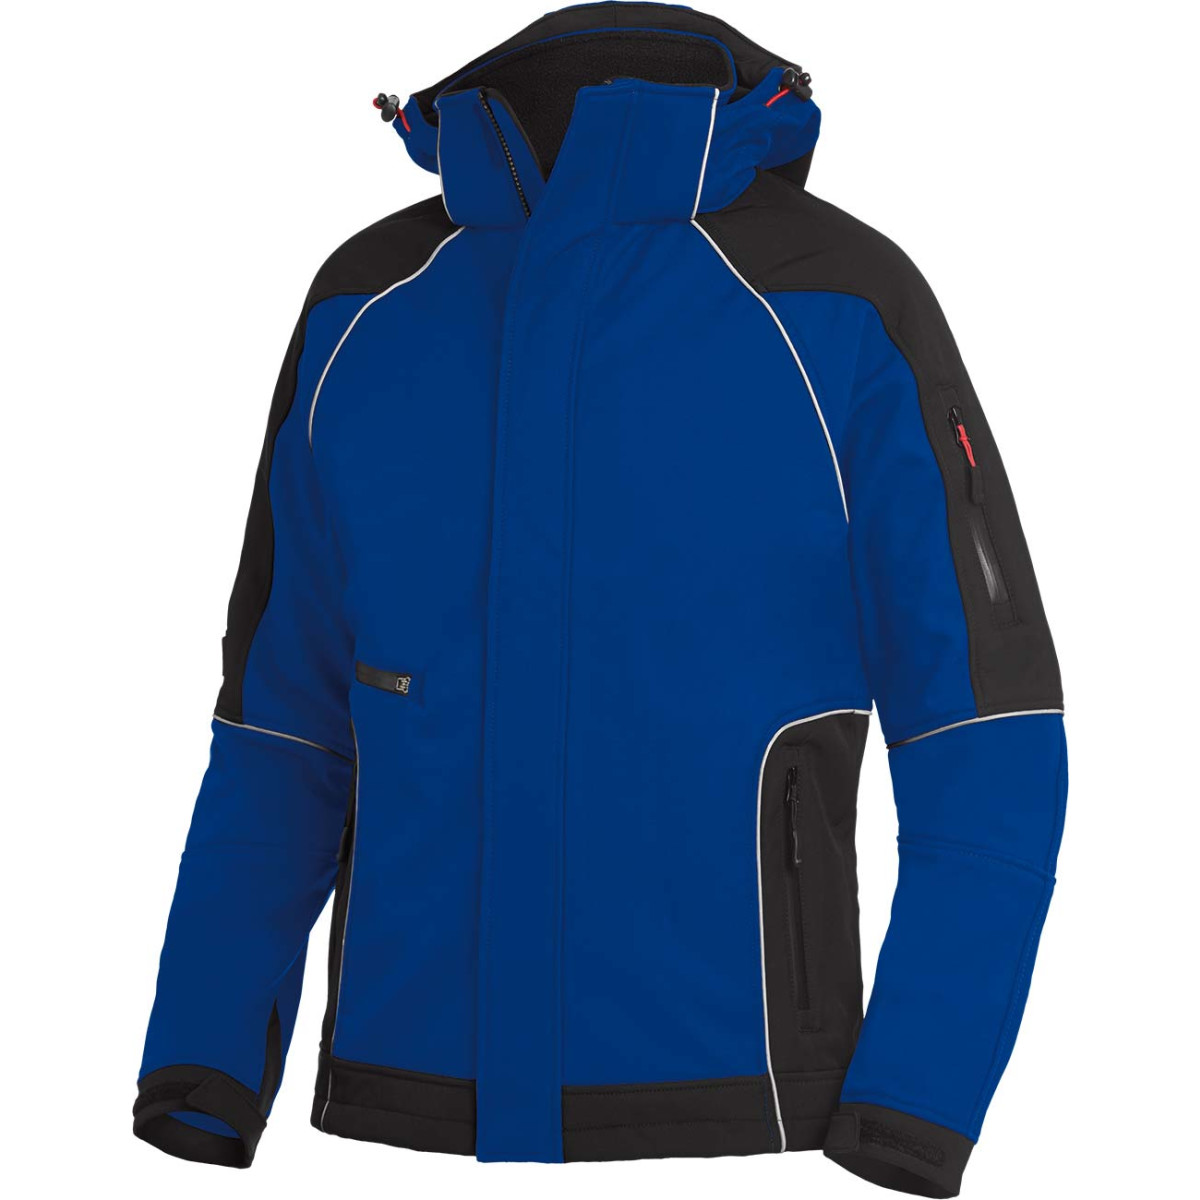 Winter Softshell-Jacke blau-schwarz € Arbeitsklamotten.de, - 92,72